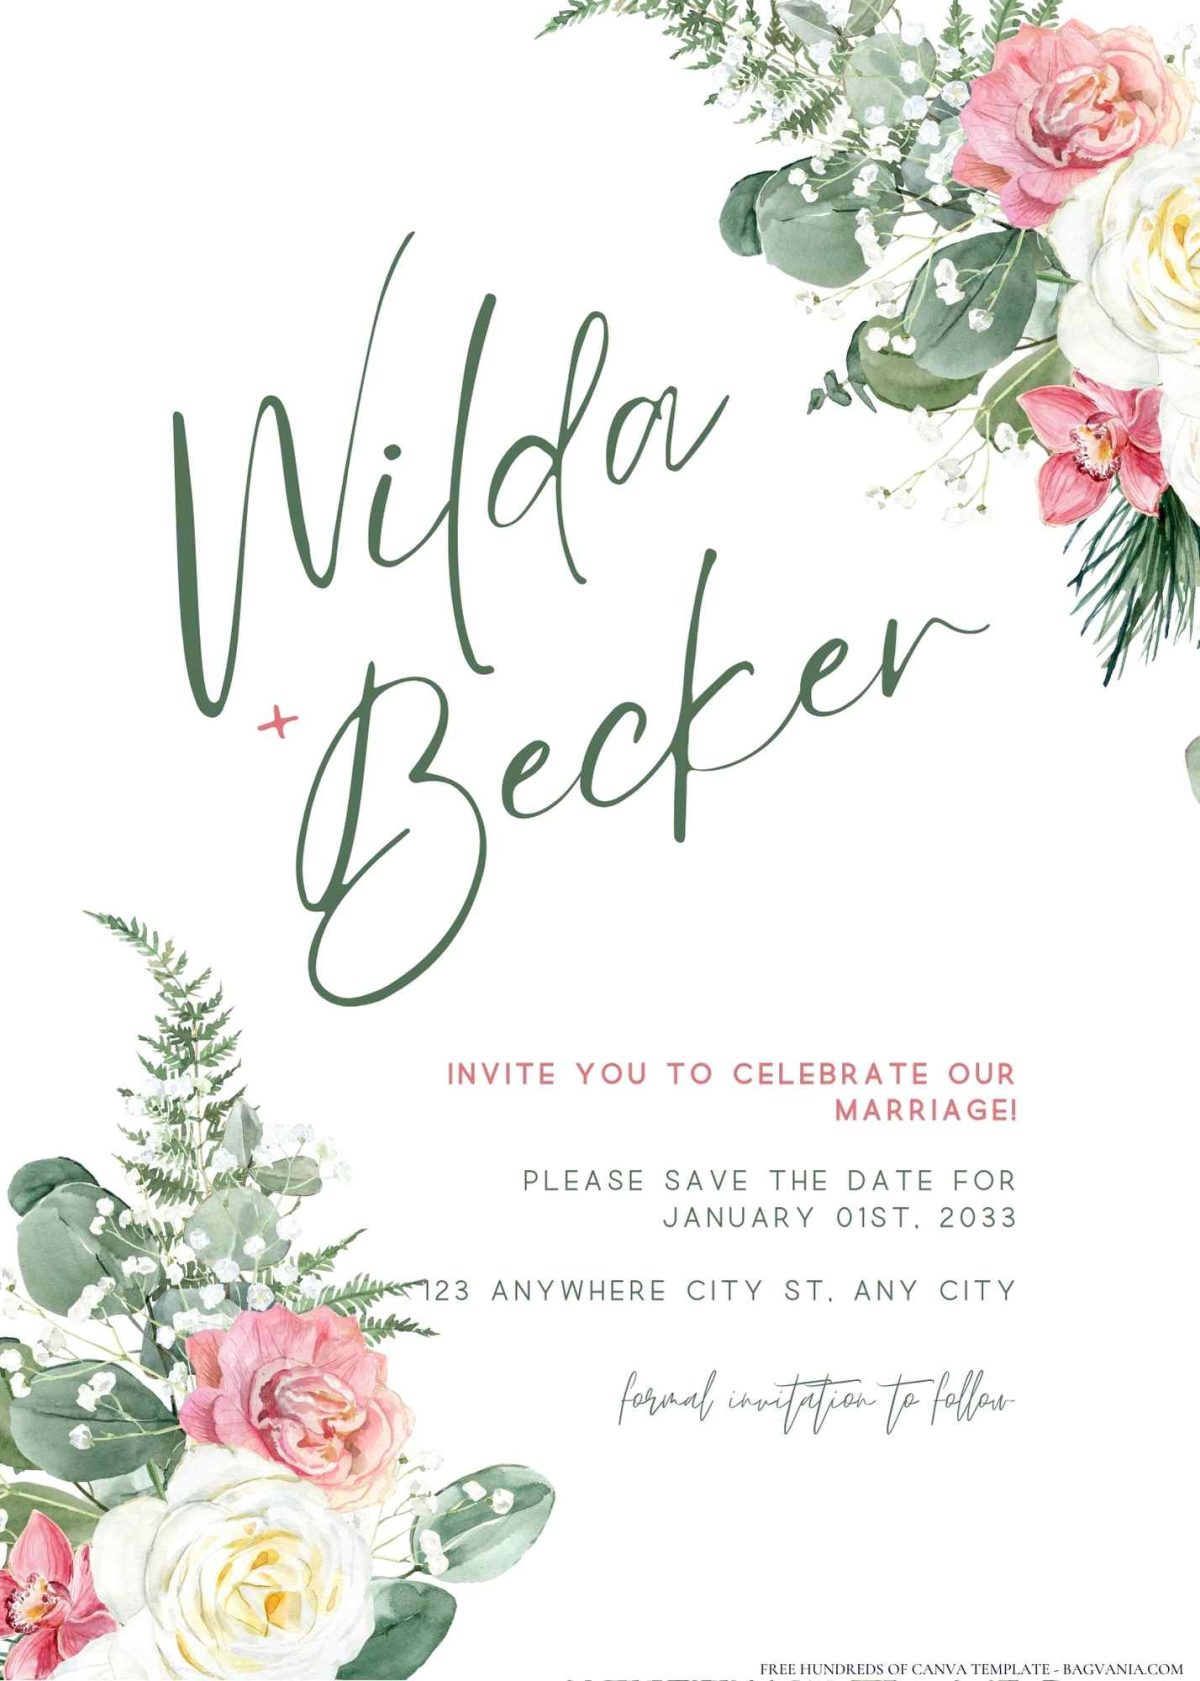 FREE Editable garden-inspired with greenery wedding invitation